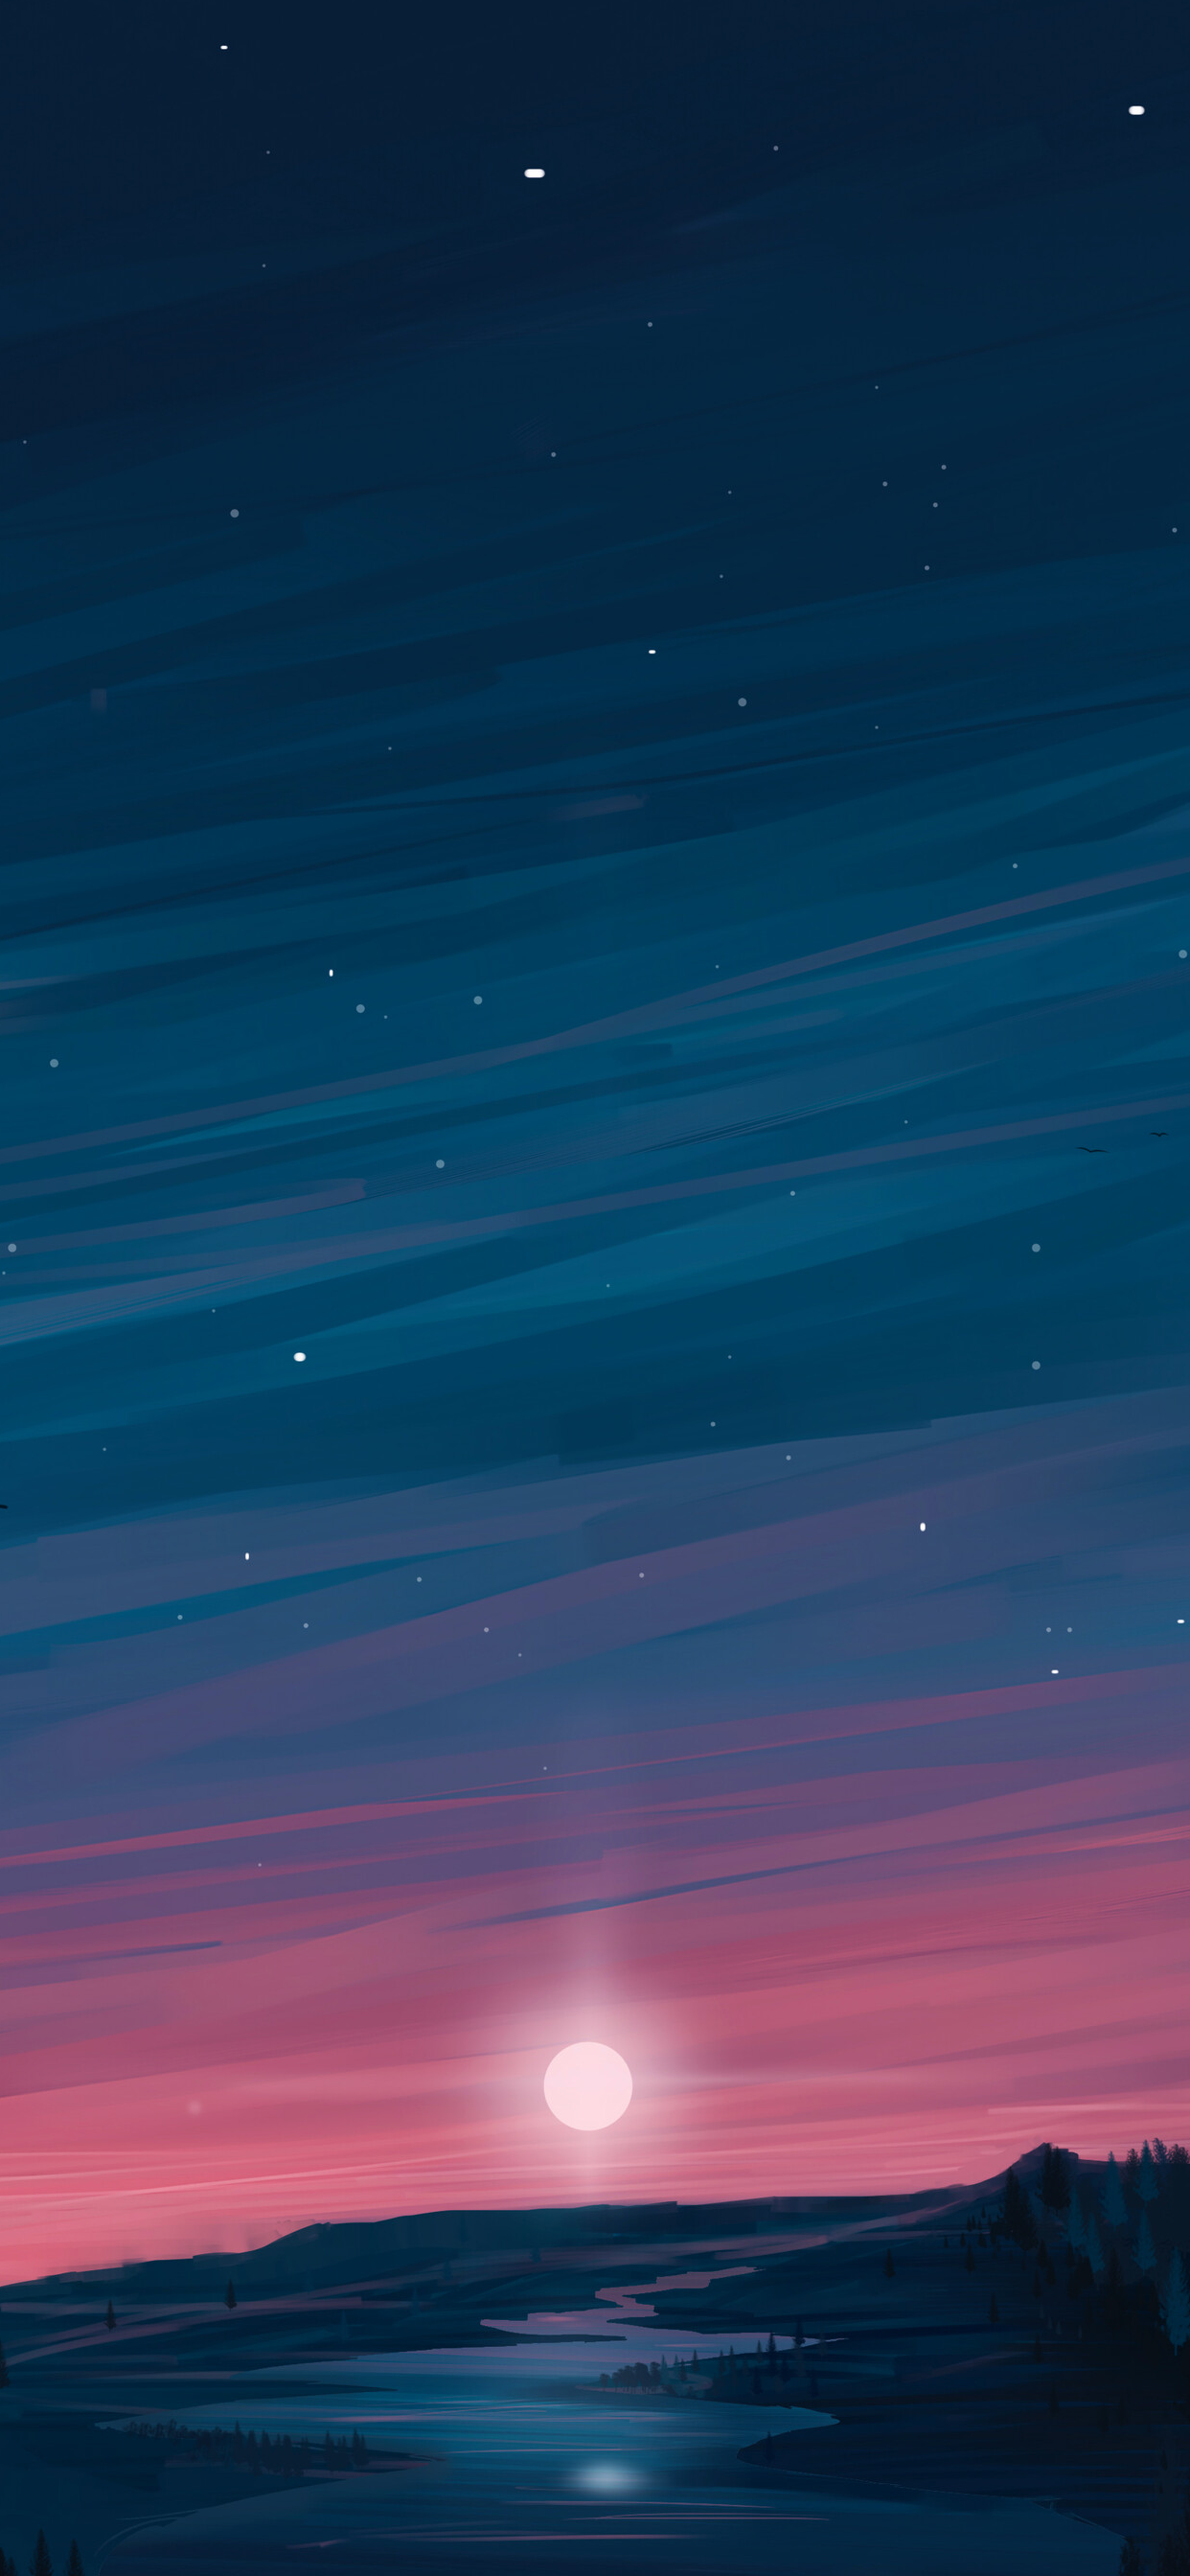 iPhone Wallpaper. Sky, Blue, Atmosphere, Horizon, Calm, Night